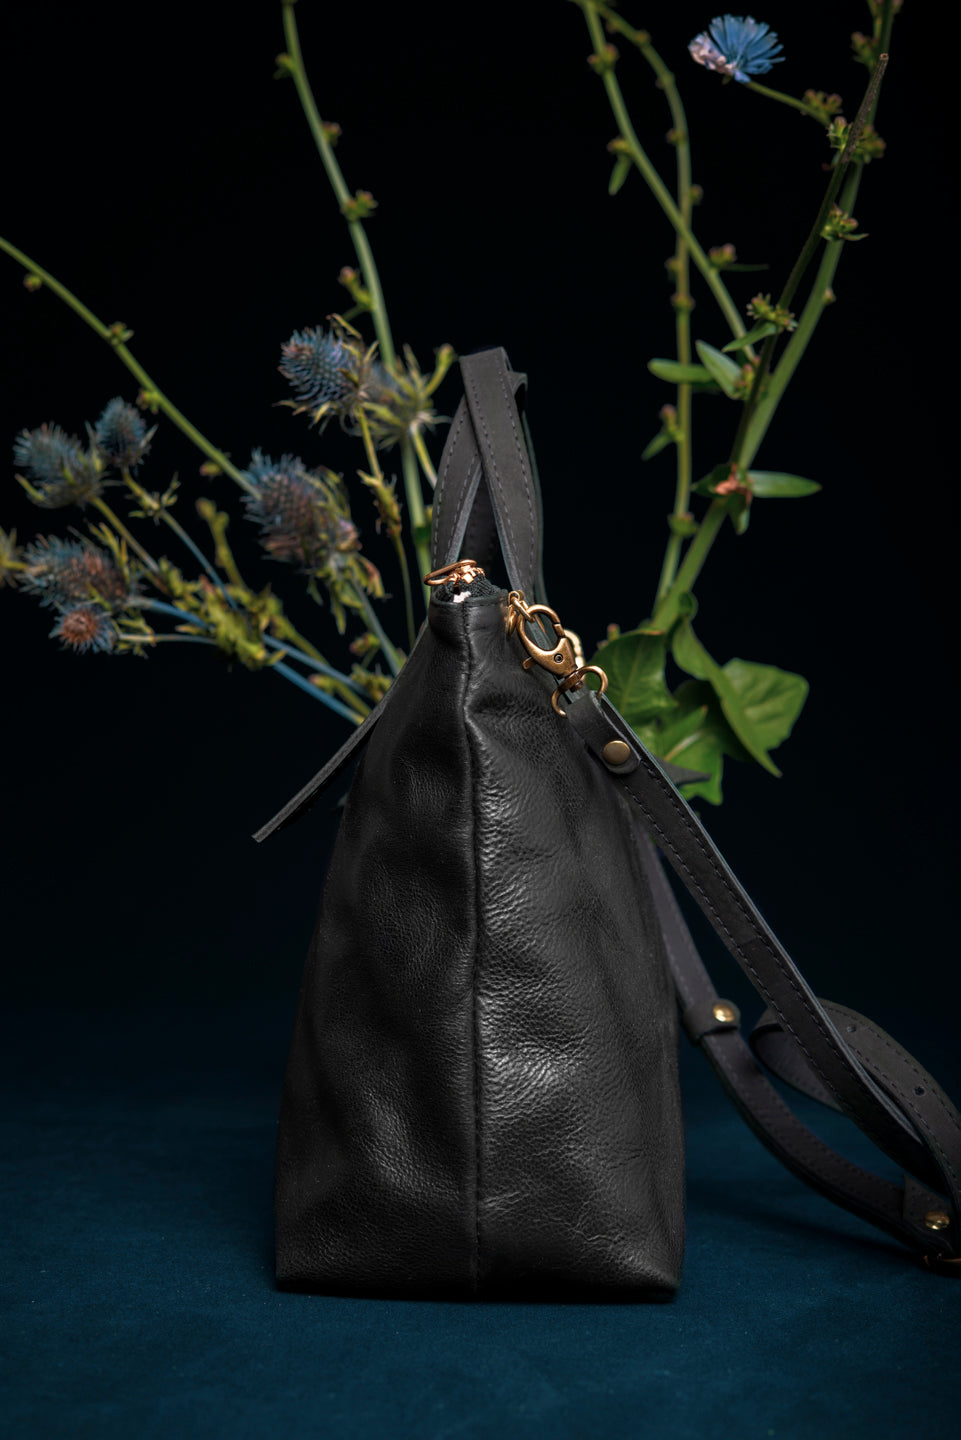 PAPINEAU leather handbag, Veinage handmade in Montreal, Canada